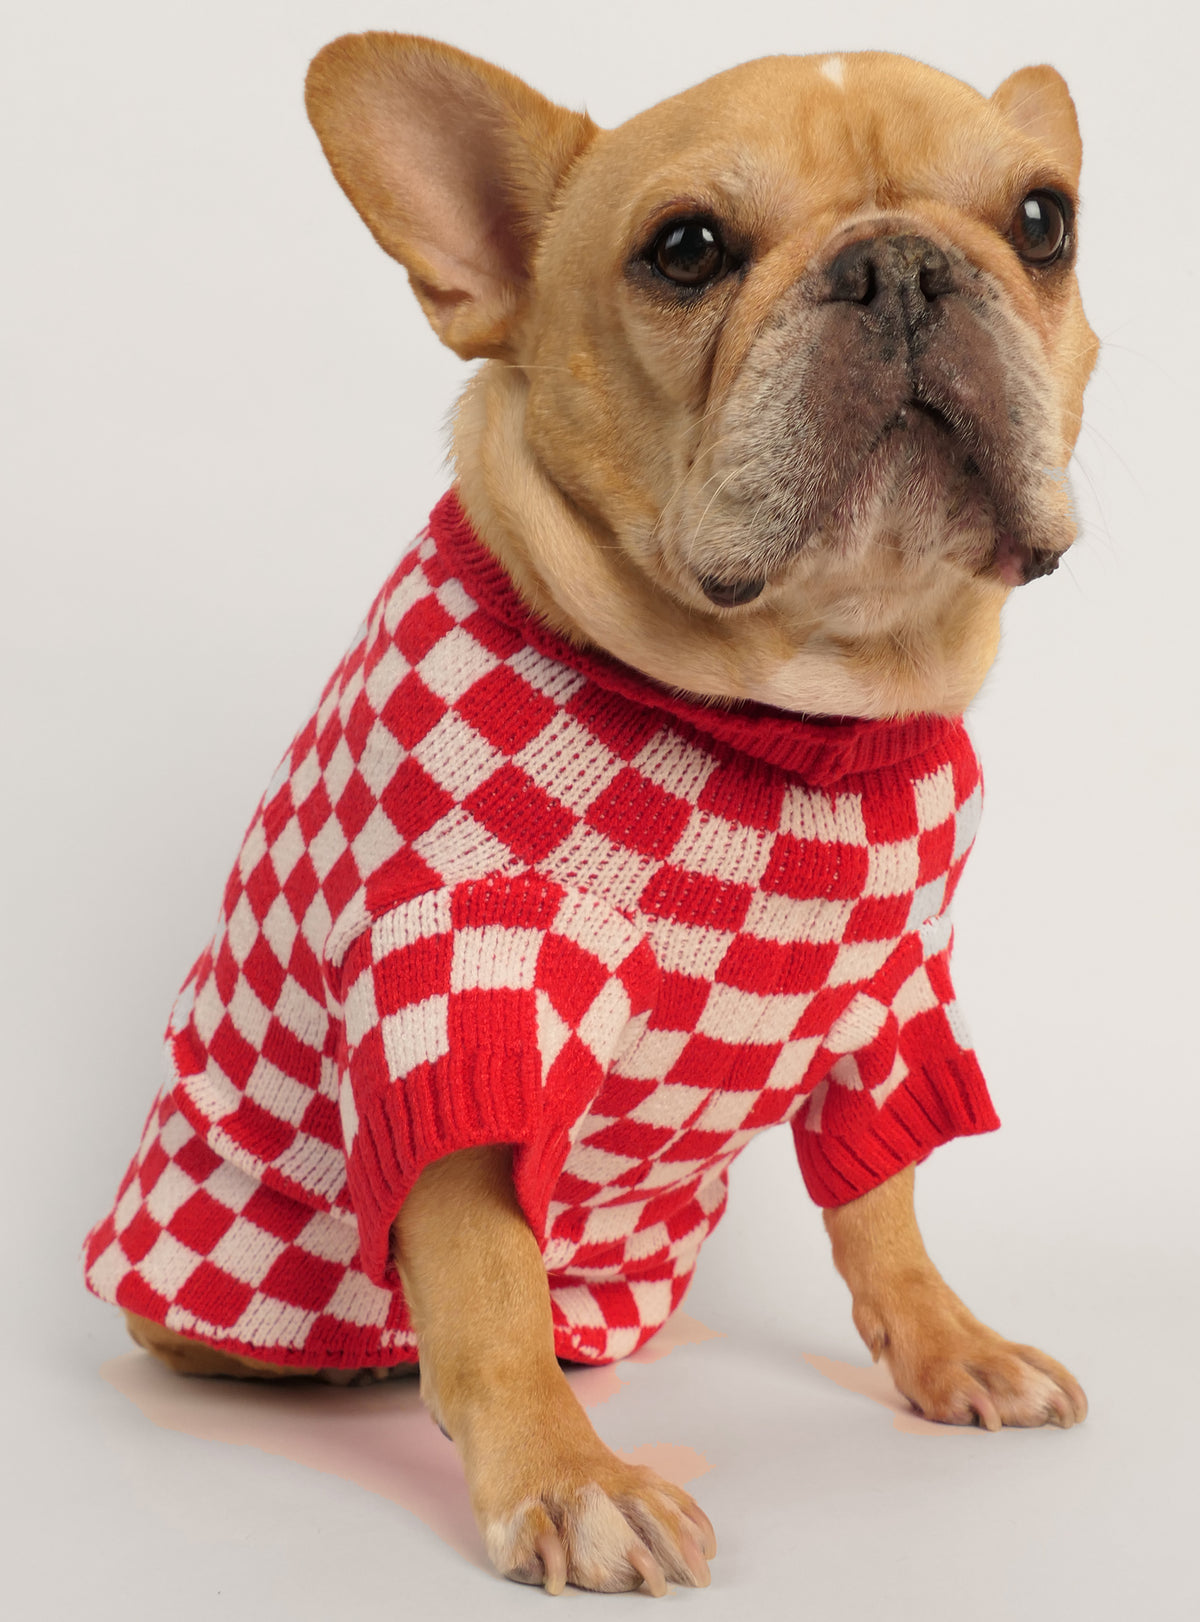 The Checkerboard Dog Sweater